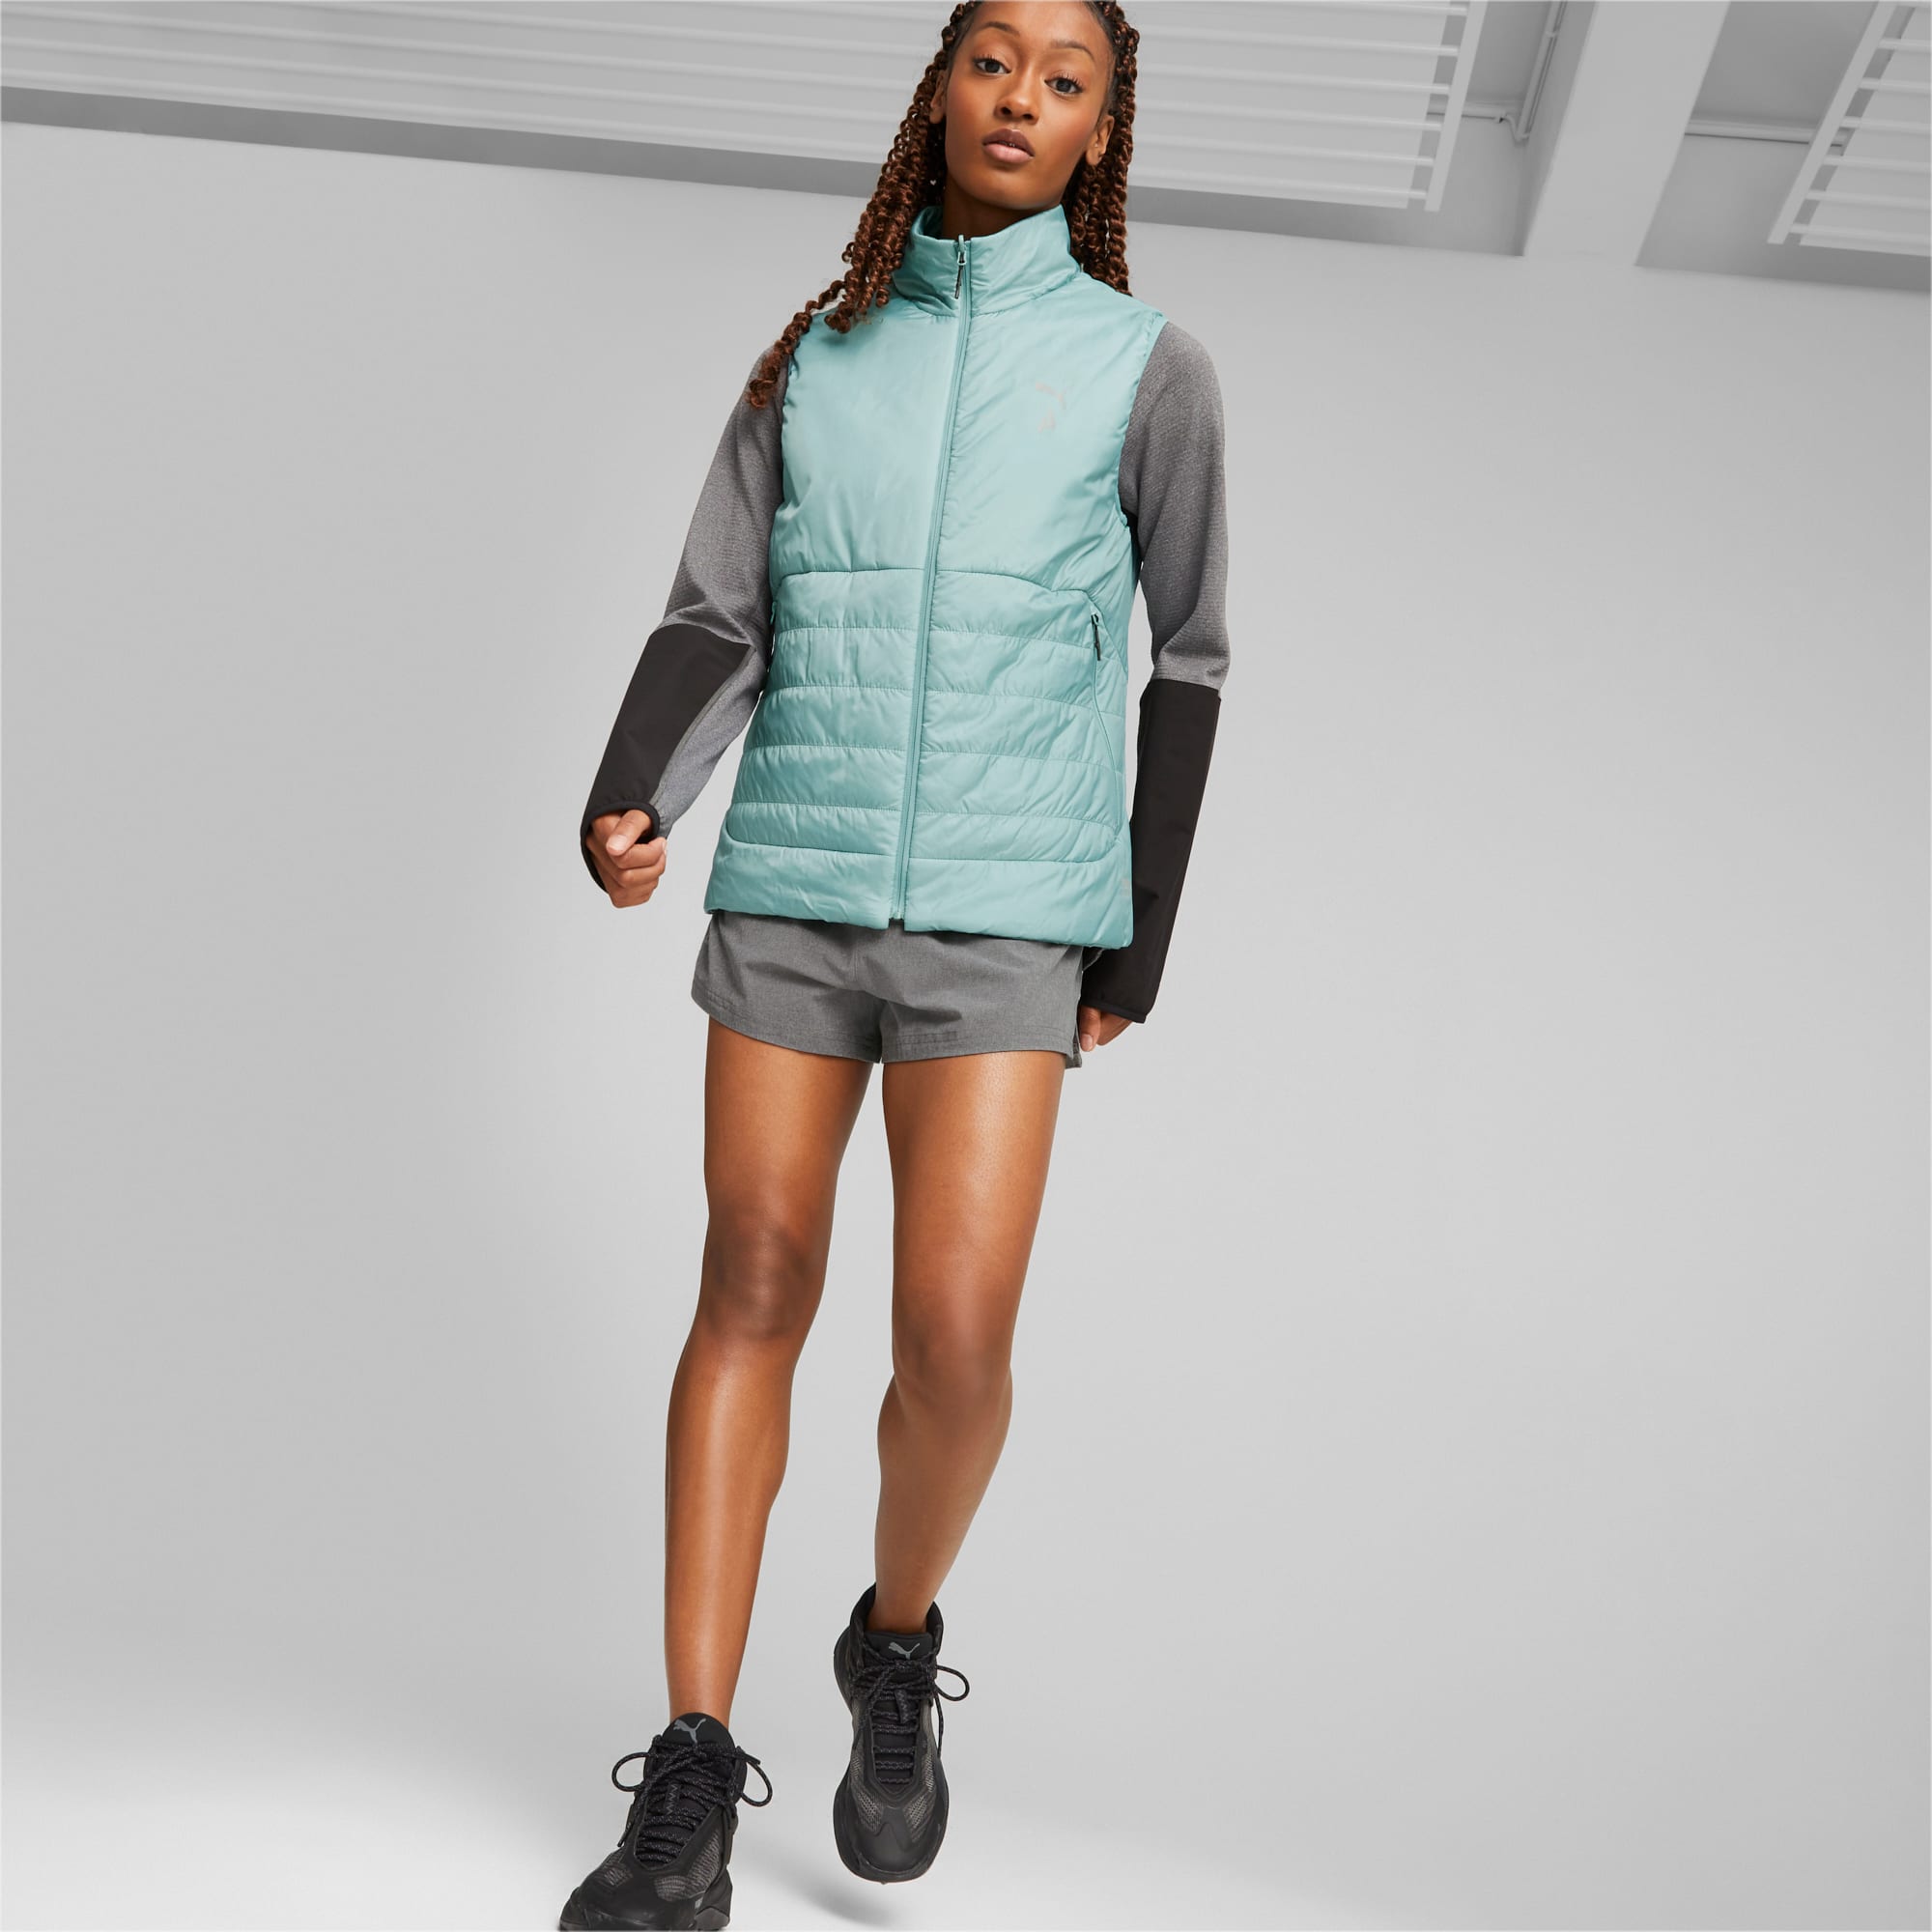 PUMA Seasons Reversible Primaloft Hiking Vest Women Women's Jacket, Adriatic, Size XS, Clothing